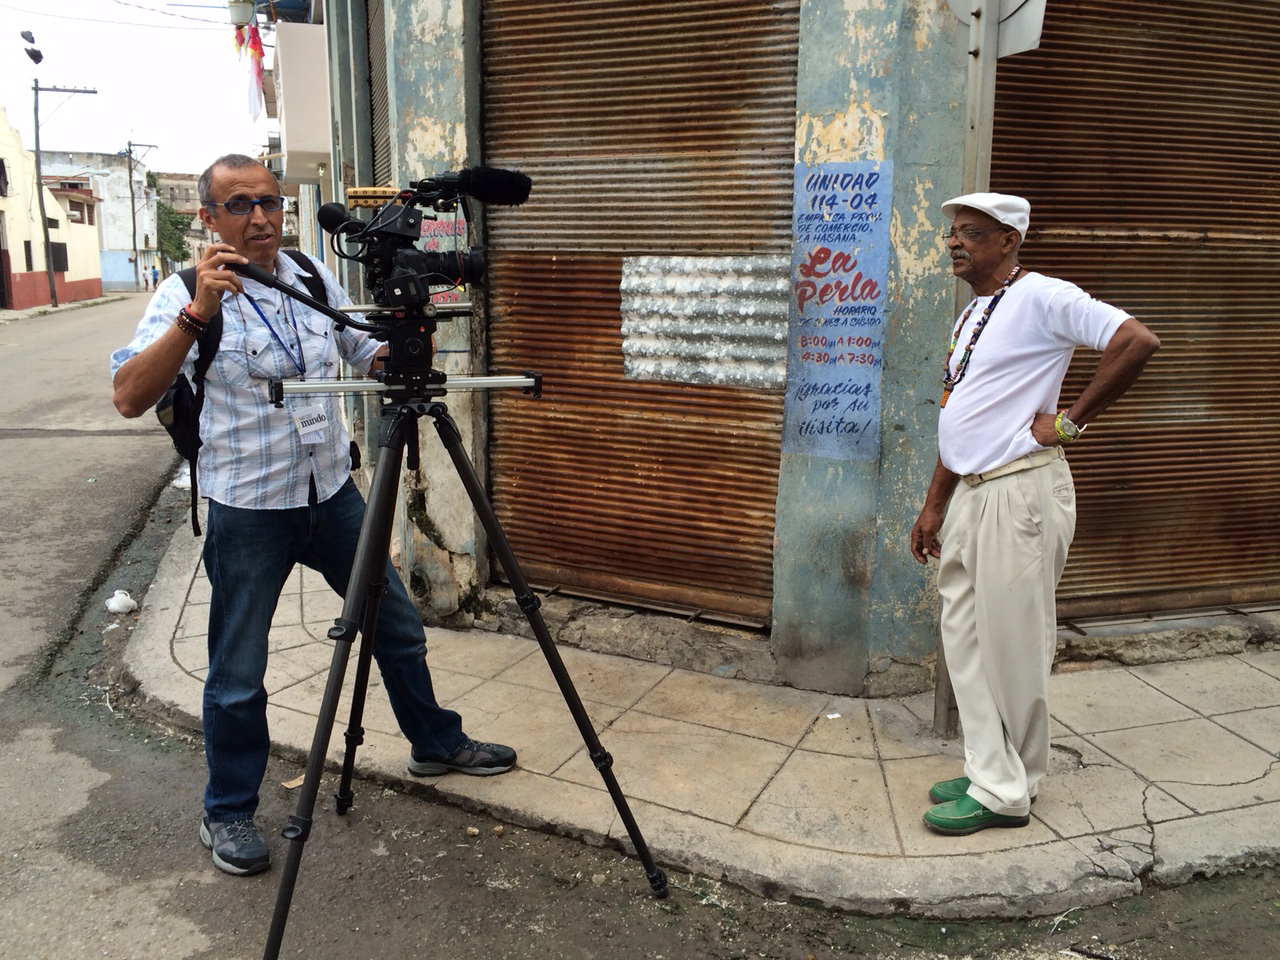  CUBA- The camera operator filmed b-roll of Julio Abreu Abreu, Babalawo, while he rested on a pole.

El operador de cámara filmó vídeo de archivo de Julio Abreu Abreu, Babalawo, mientras descansaba en un poste.
(Photo Credit: National Geographic Chan